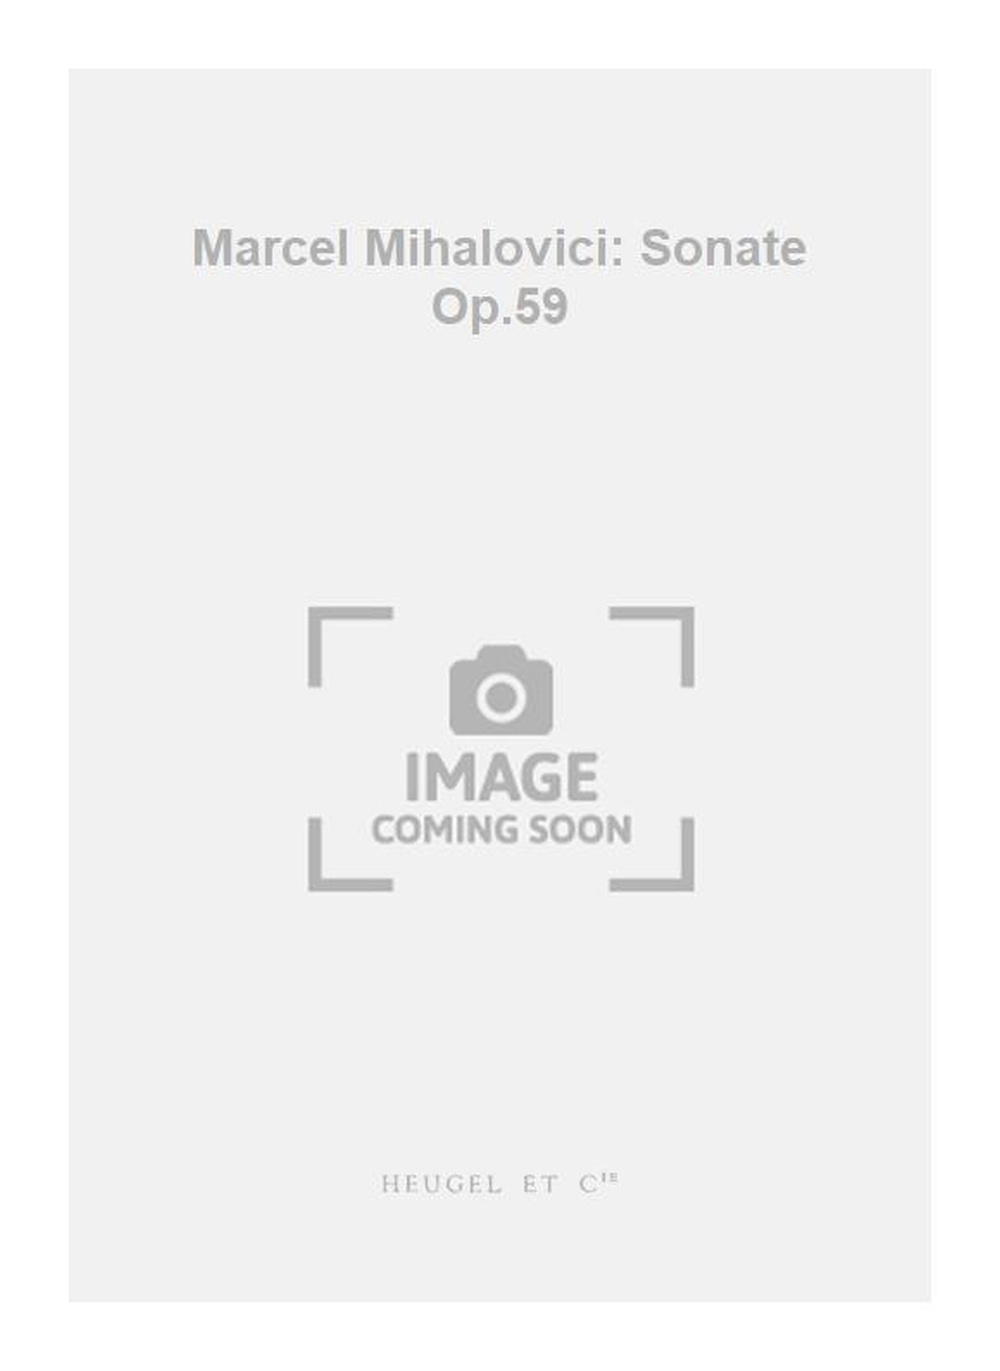 Marcel Mihalovici: Marcel Mihalovici: Sonate Op.59